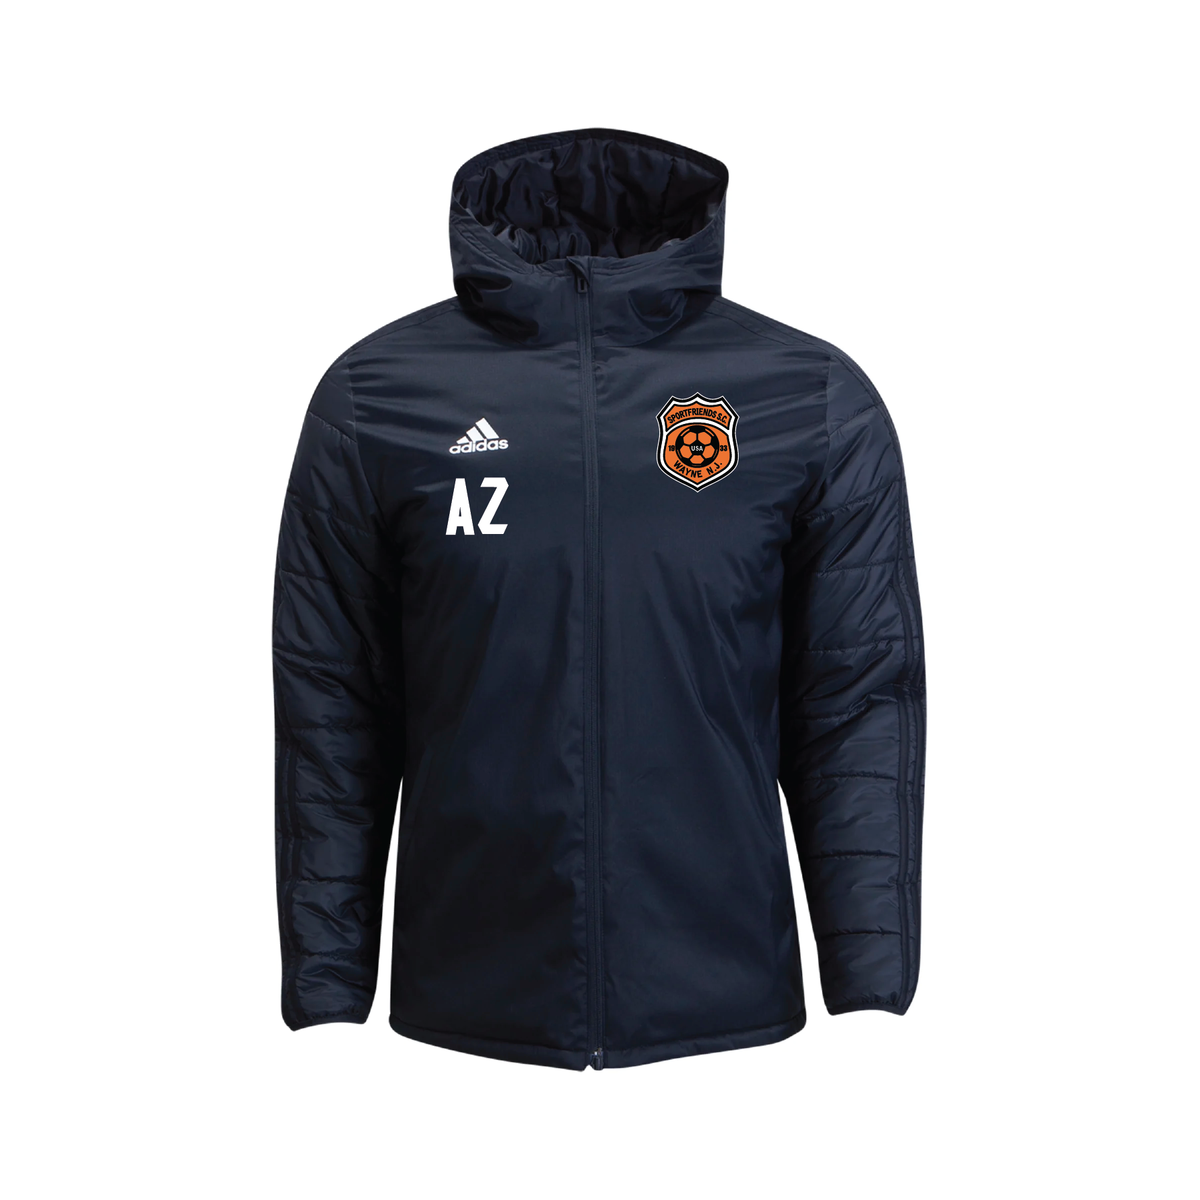 Sportfriends SC adidas Core 18 Winter Jacket Black – Soccer Zone USA